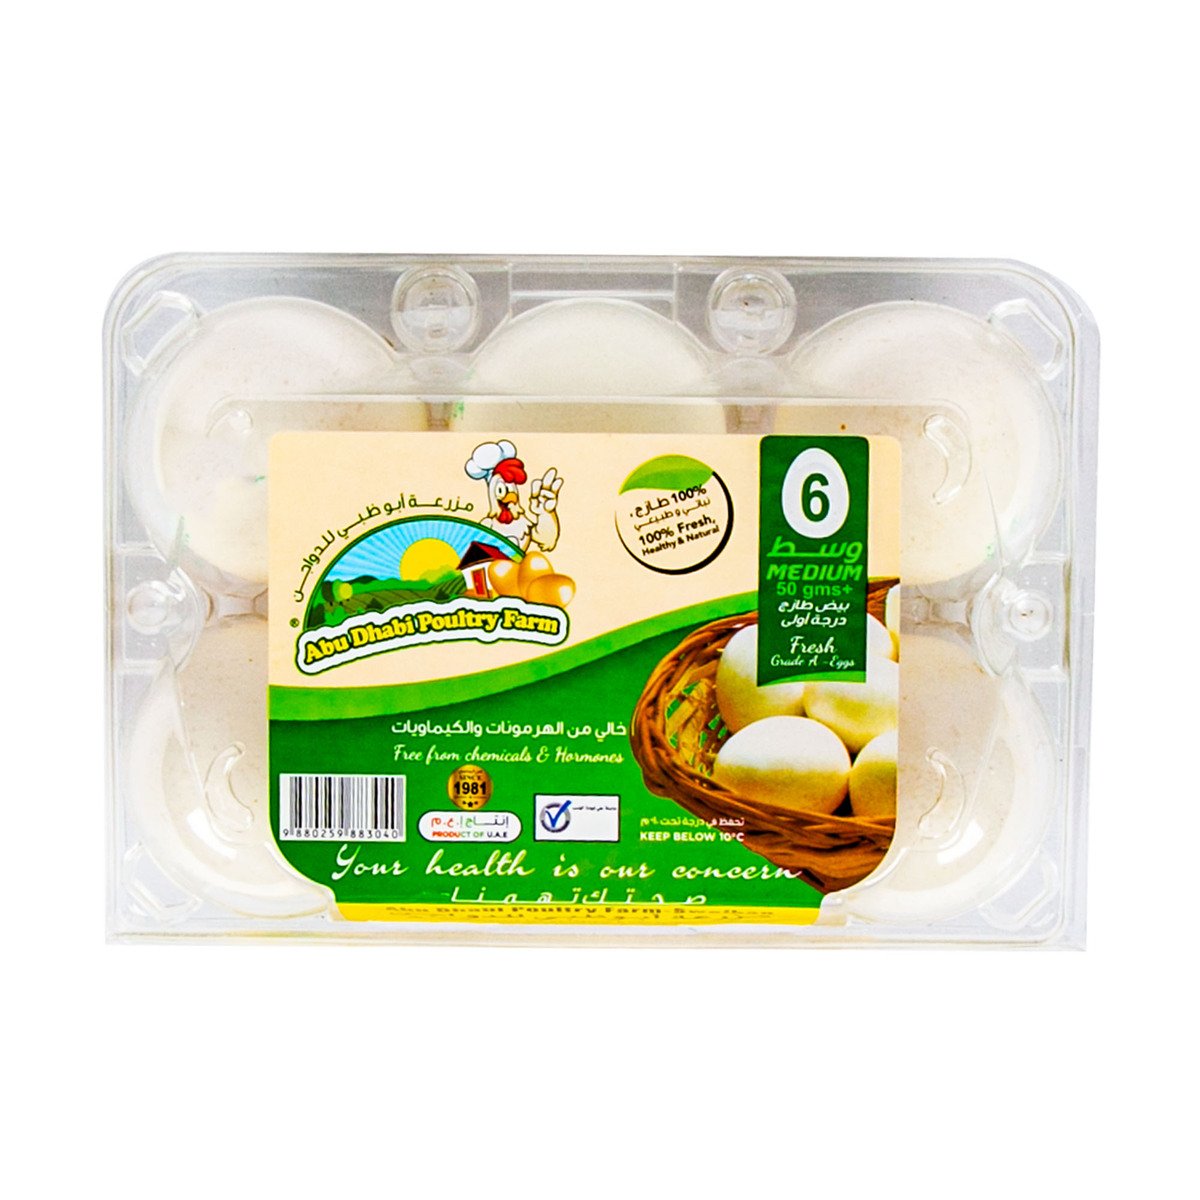 Abu Dhabi Poultry Farm Medium White Eggs 6 pcs